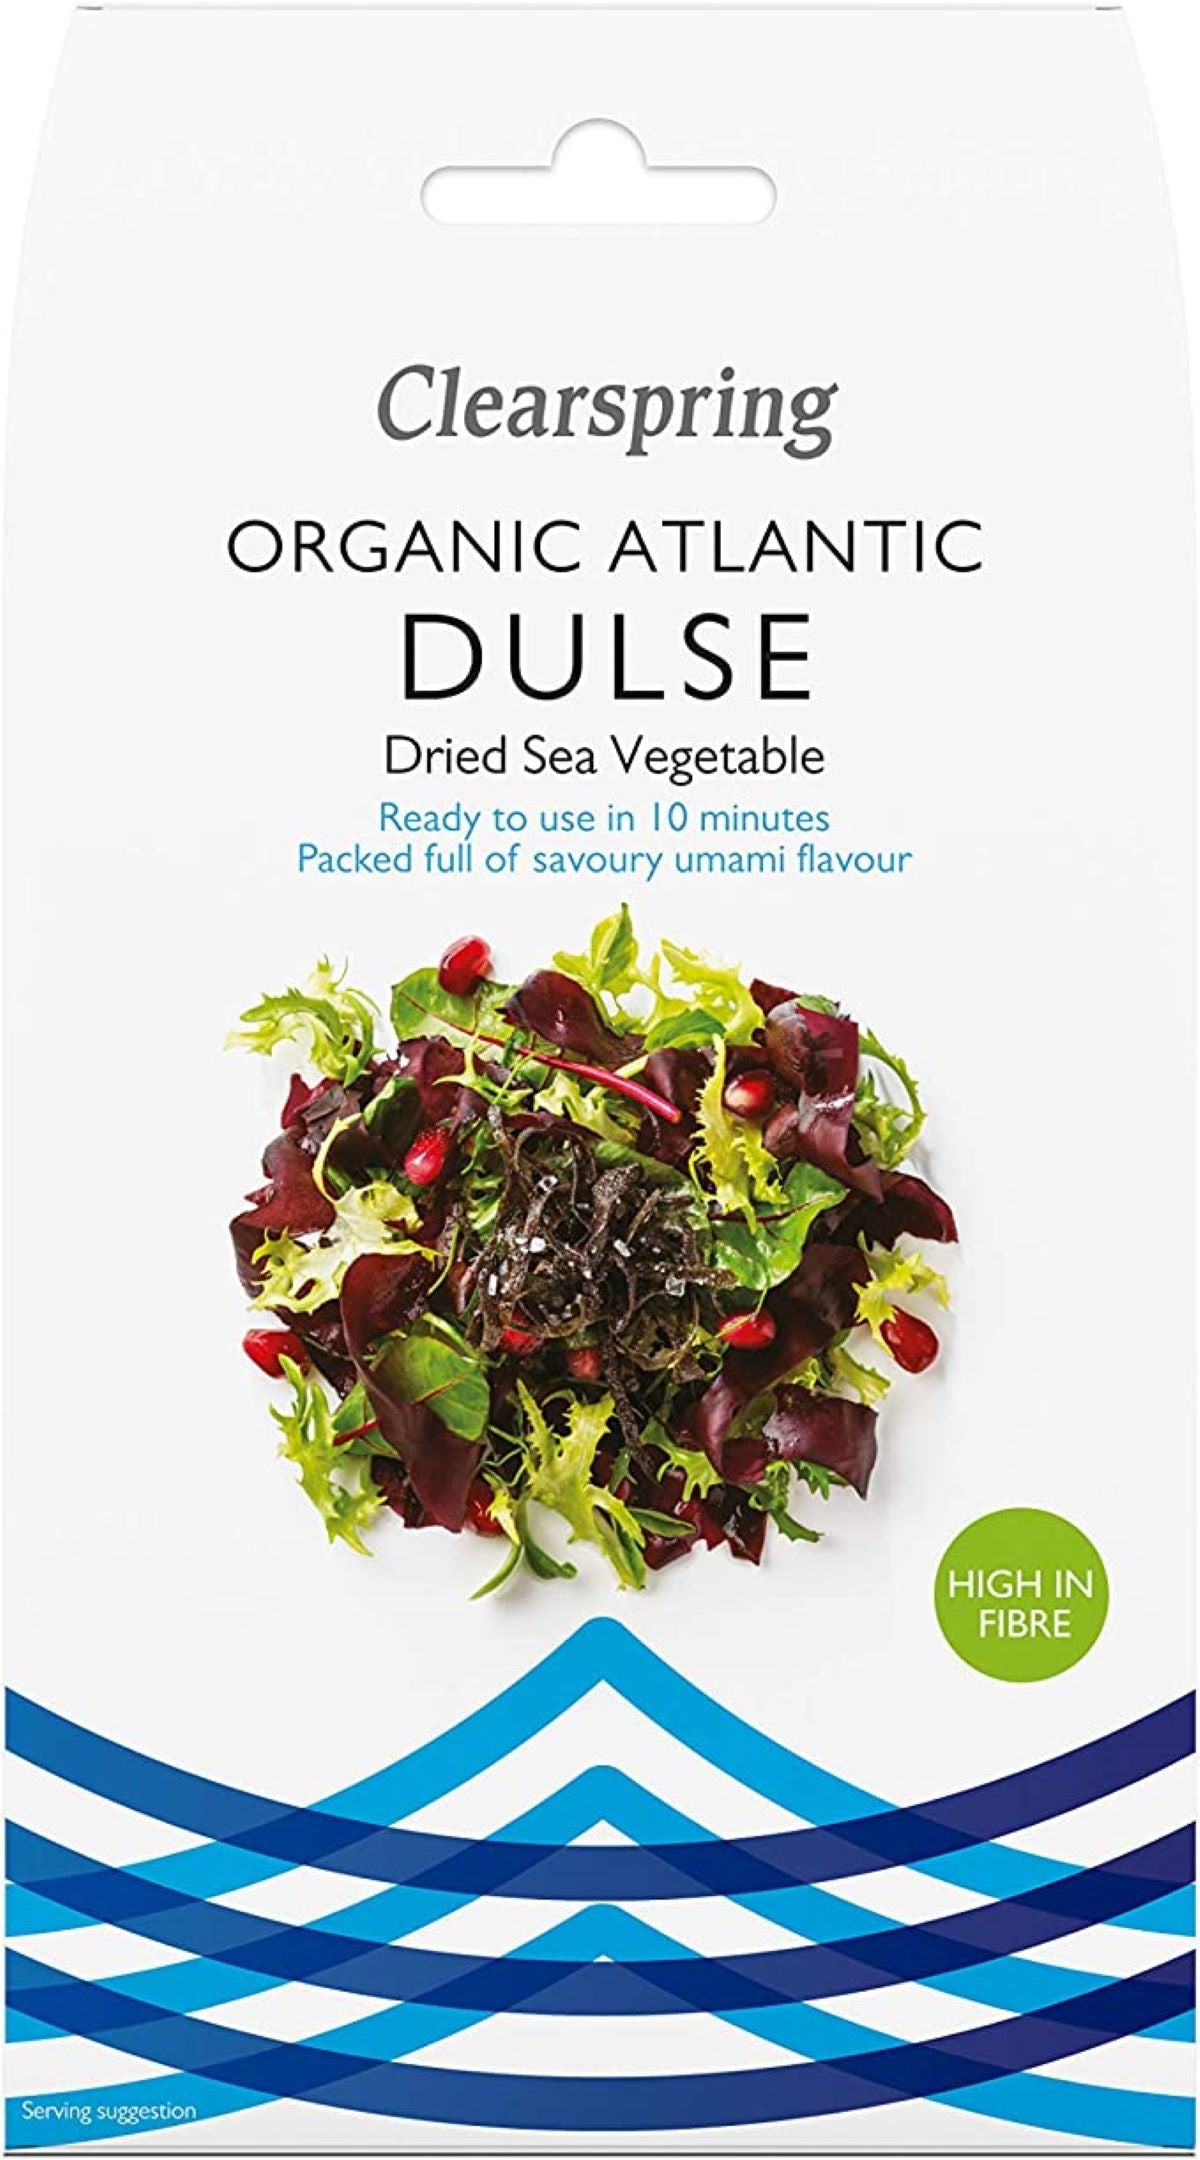 Clearspring Organic Atlantic Dulse 25g